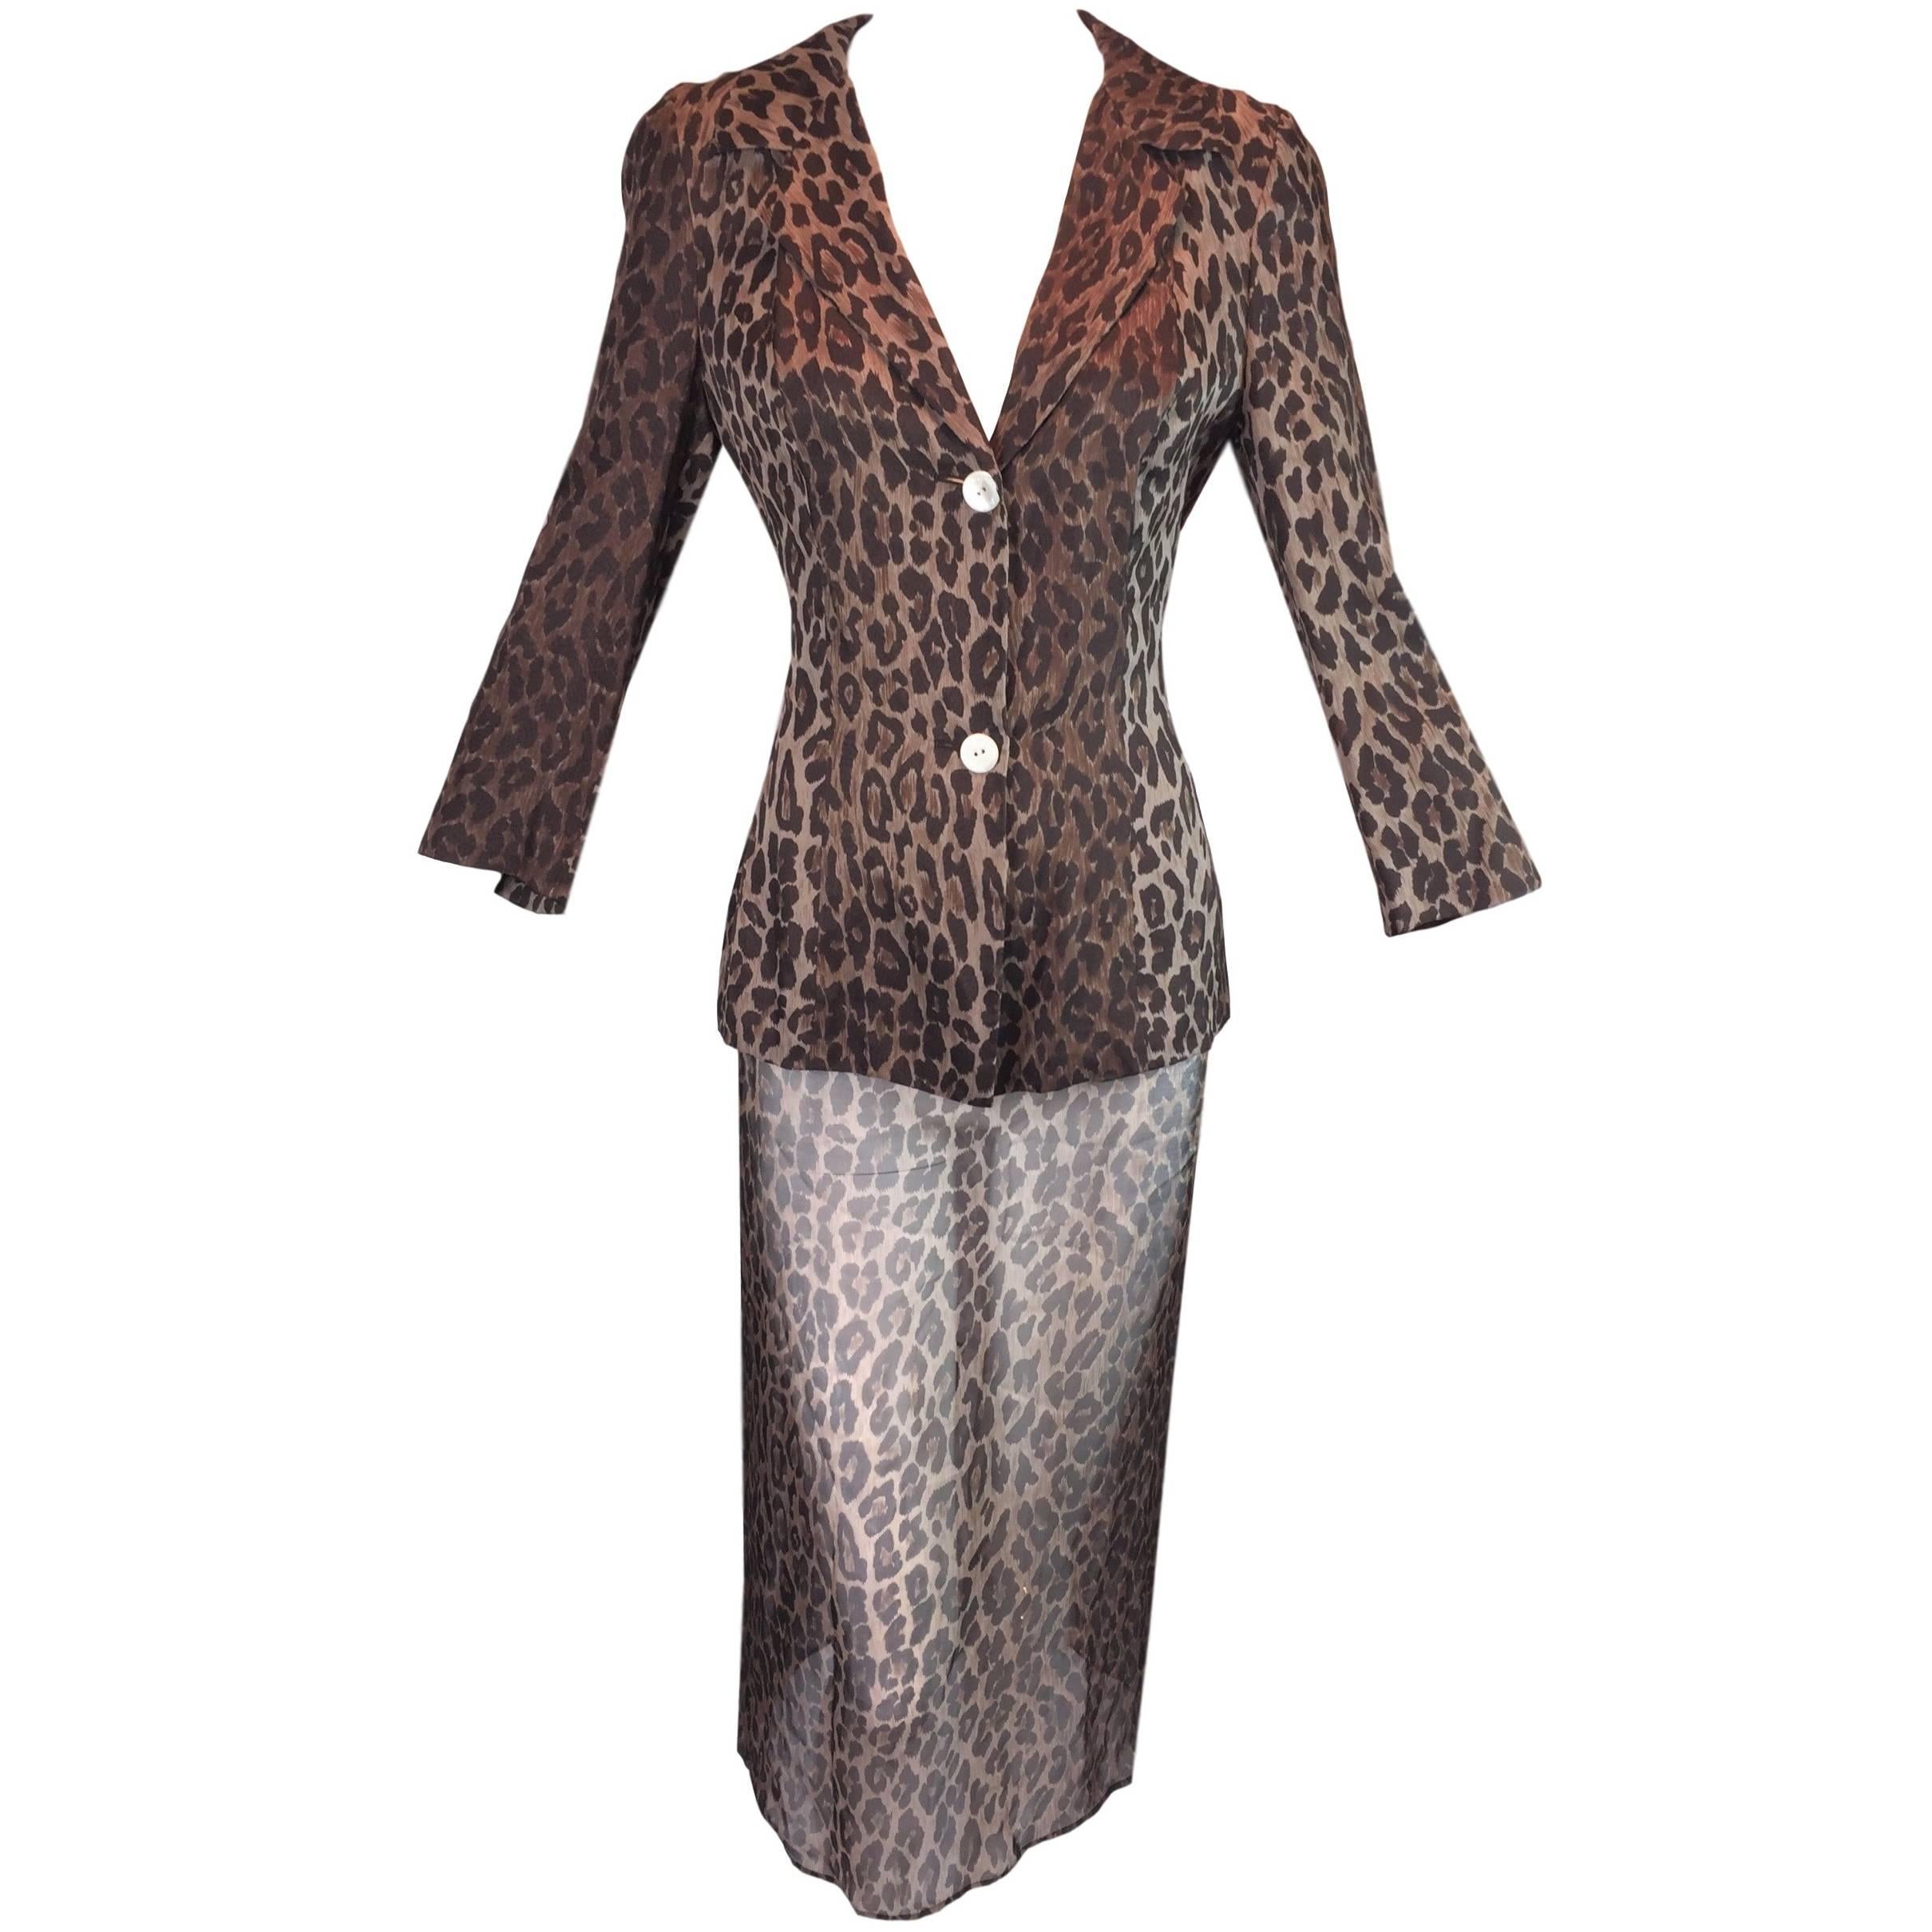 S/S 1997 Dolce & Gabbana Runway Leopard Silk Sheer Skirt Jacket Suit